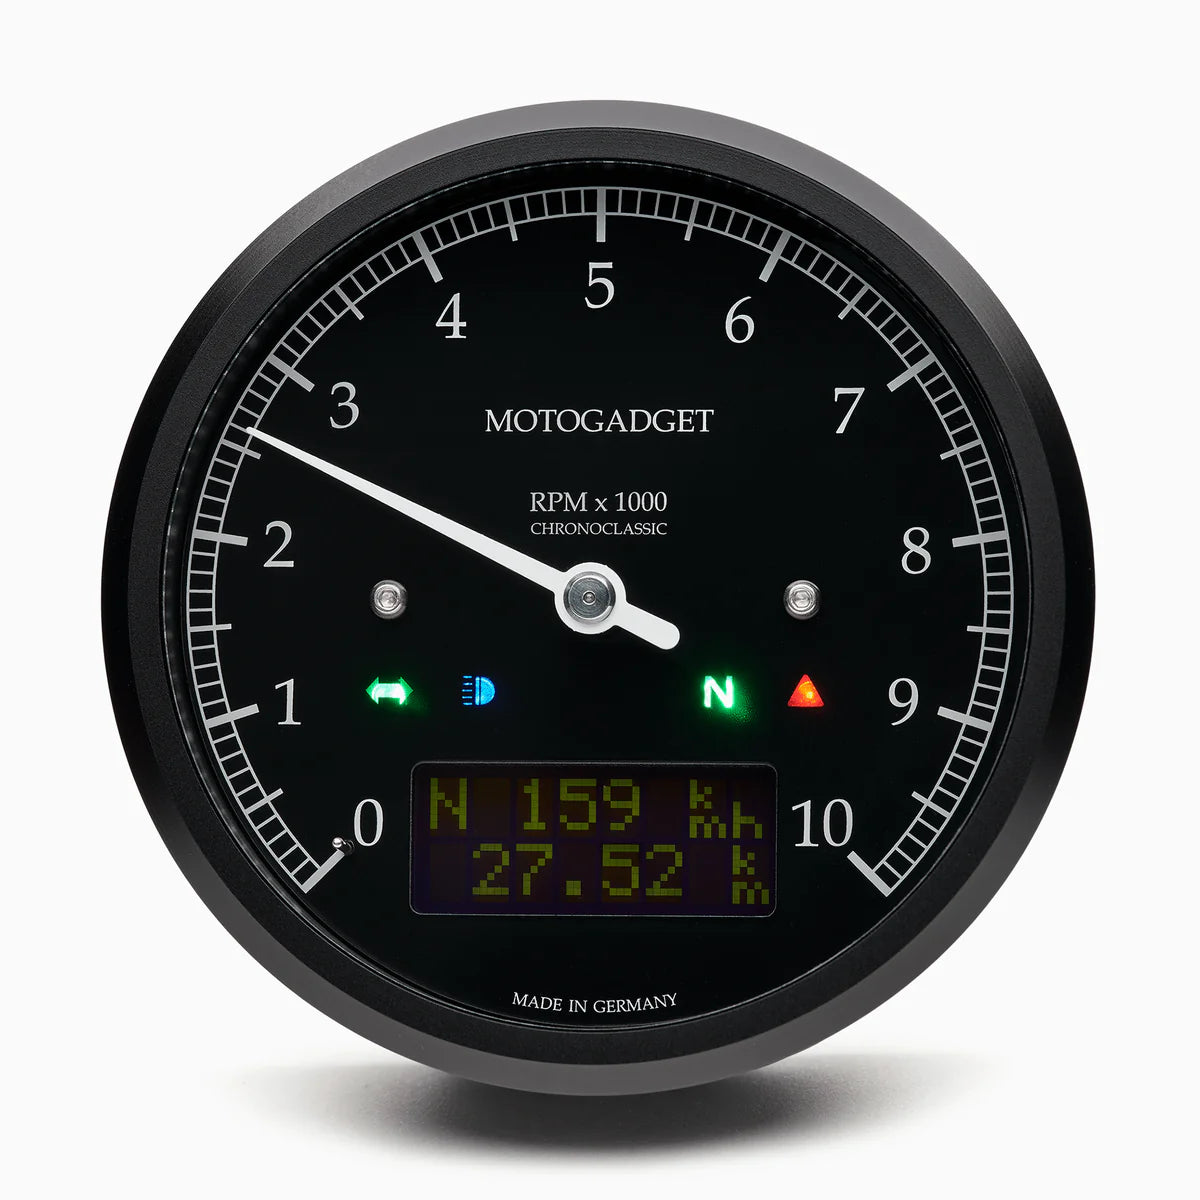 Motogadget chronoclassic speedometer motorcycle 